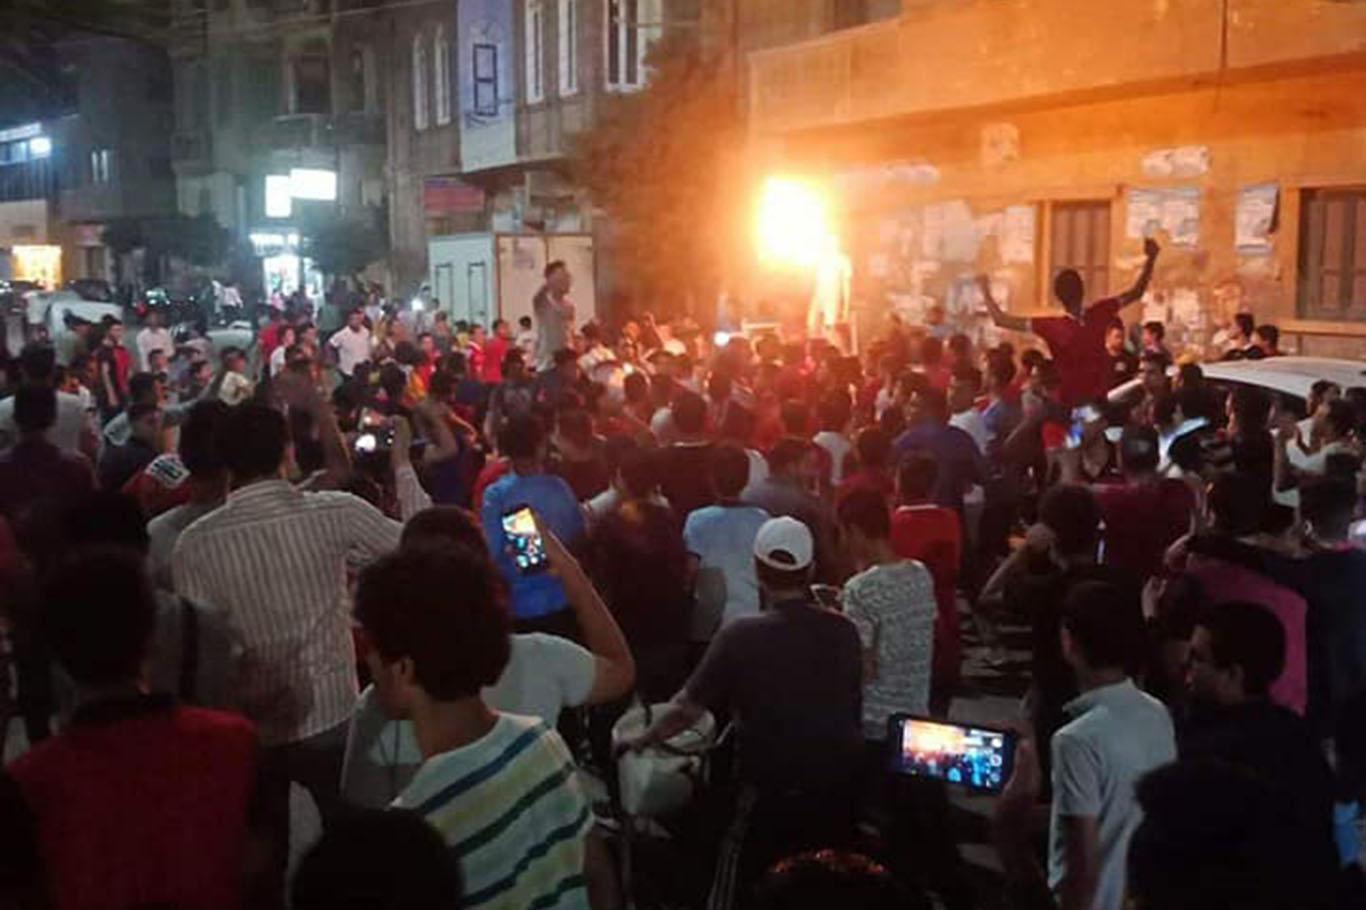 Egyptians take squares in hopes of revolution